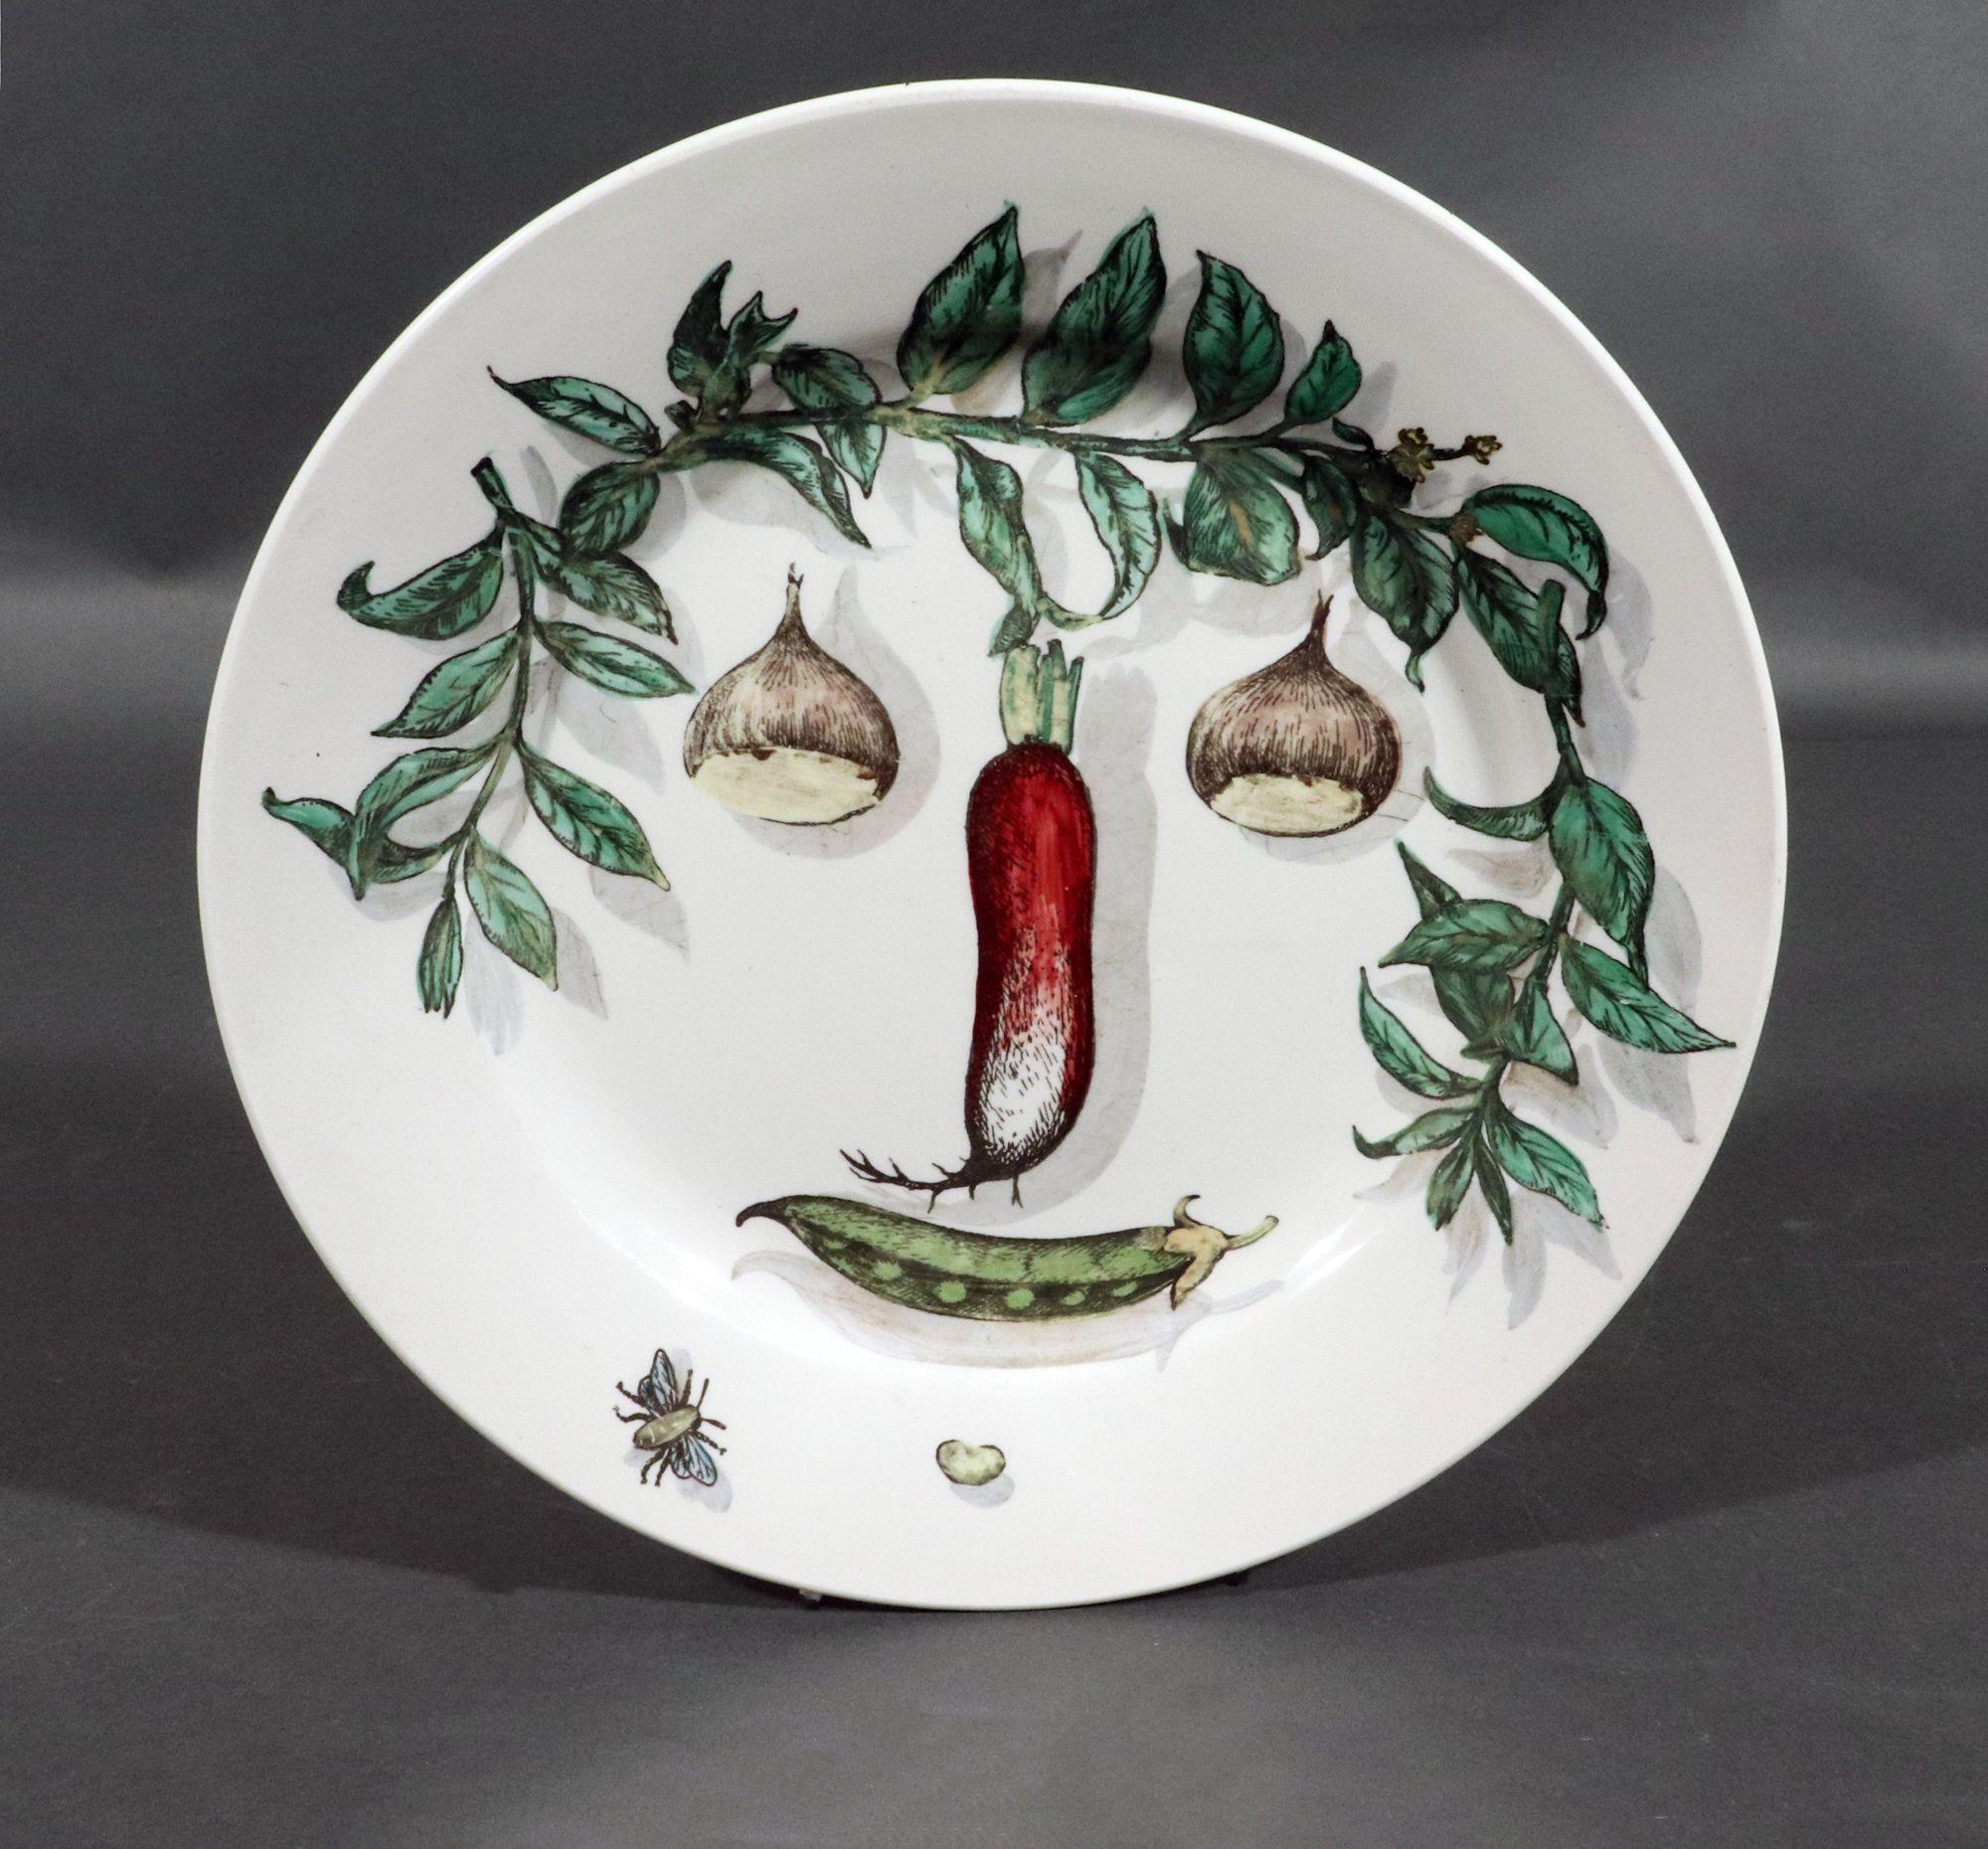 Piero Fornasetti Arcimboldesca Vegetable Face Plates, After Giuseppe Arcimboldo For Sale 4